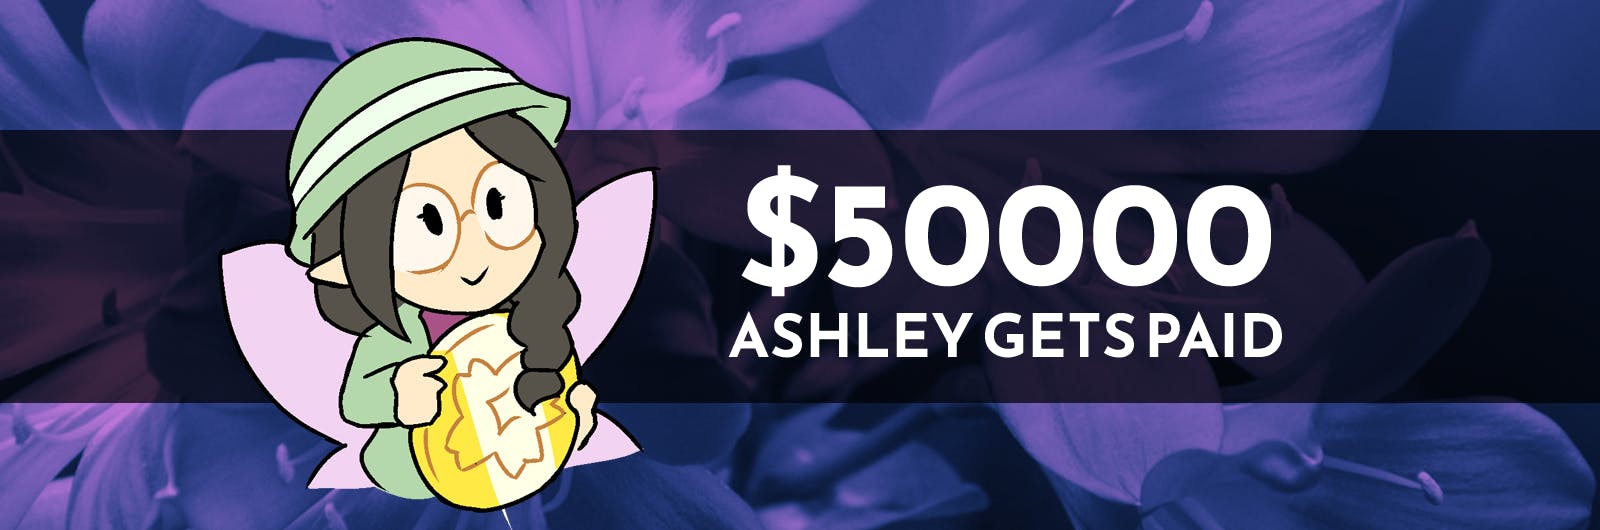 Ashley gets paid!